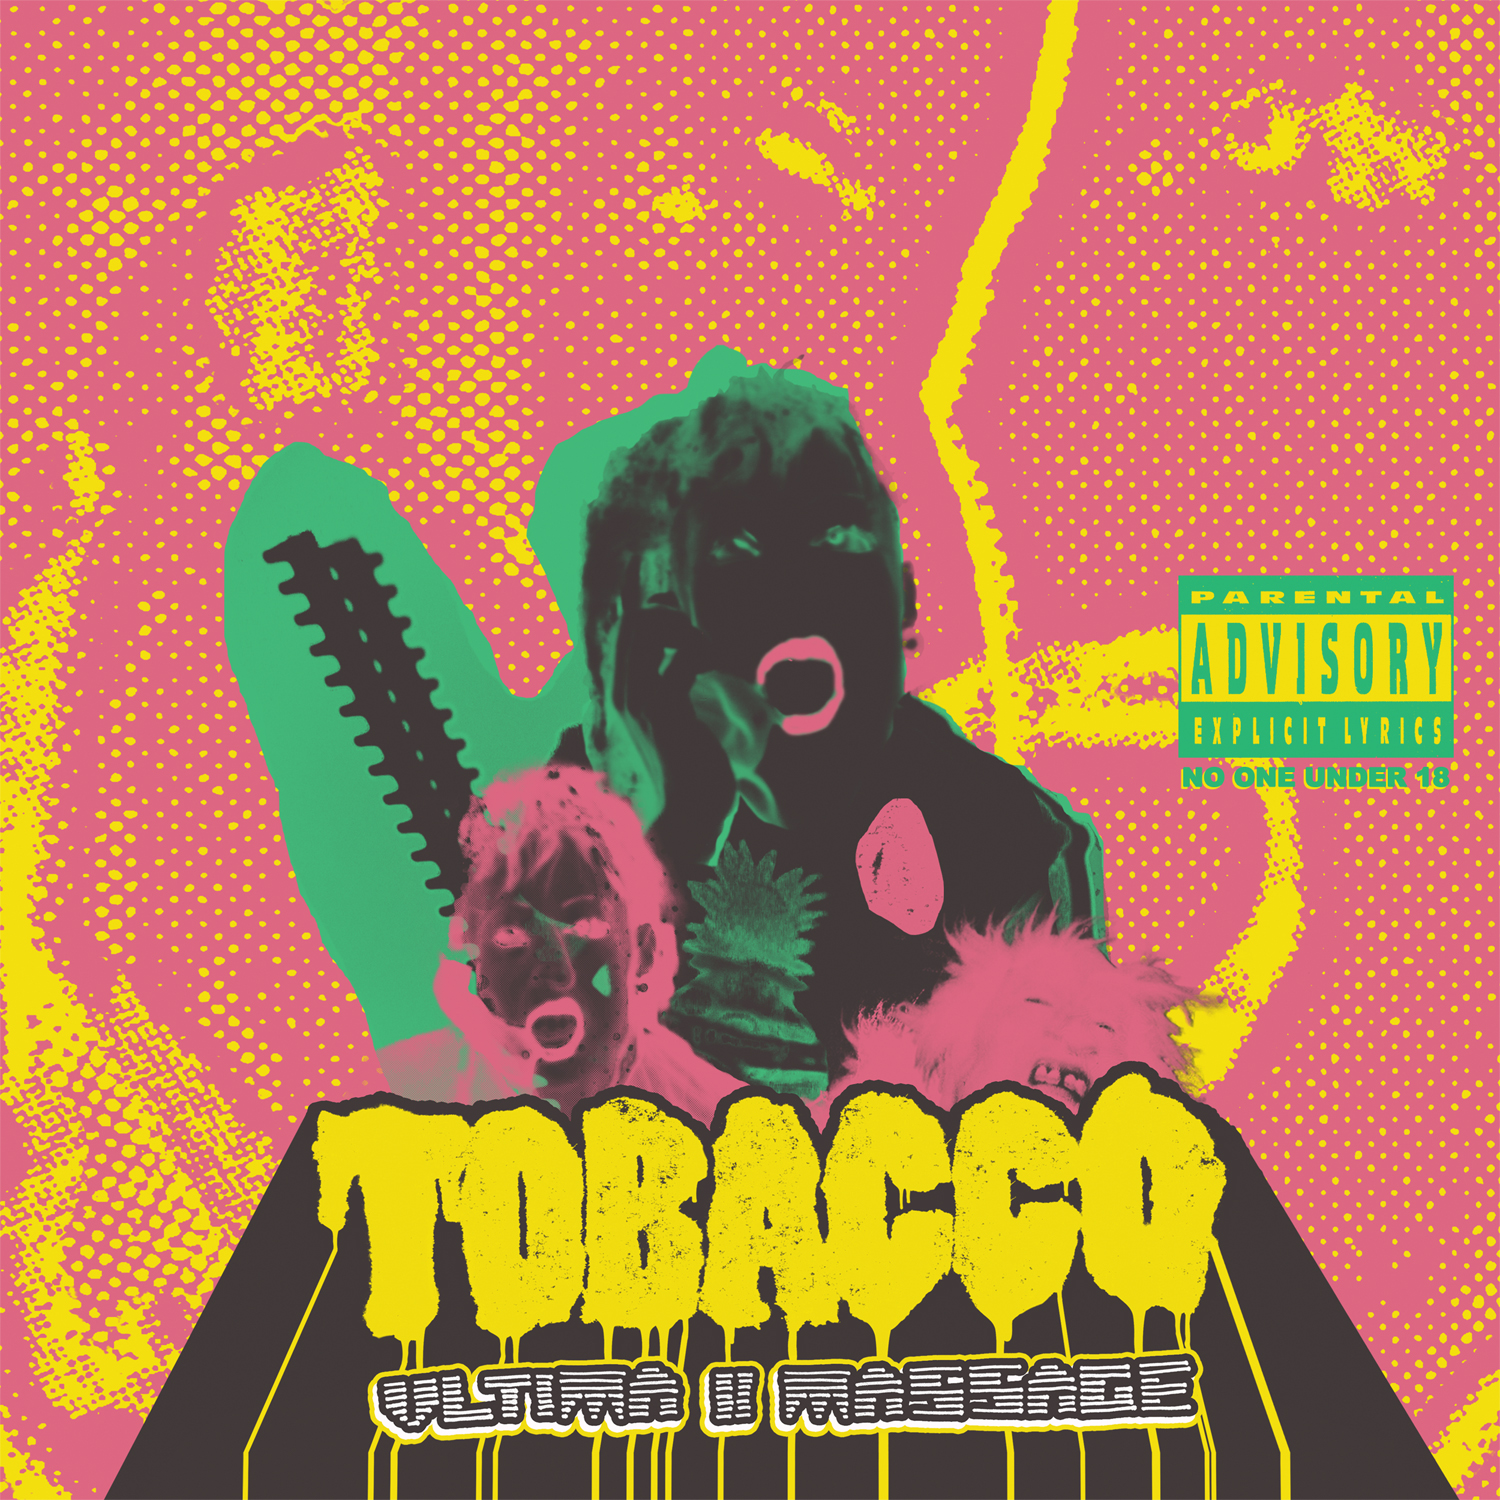 Stream the new TOBACCO album, Ultima II Massage now via Pitchfork Advance